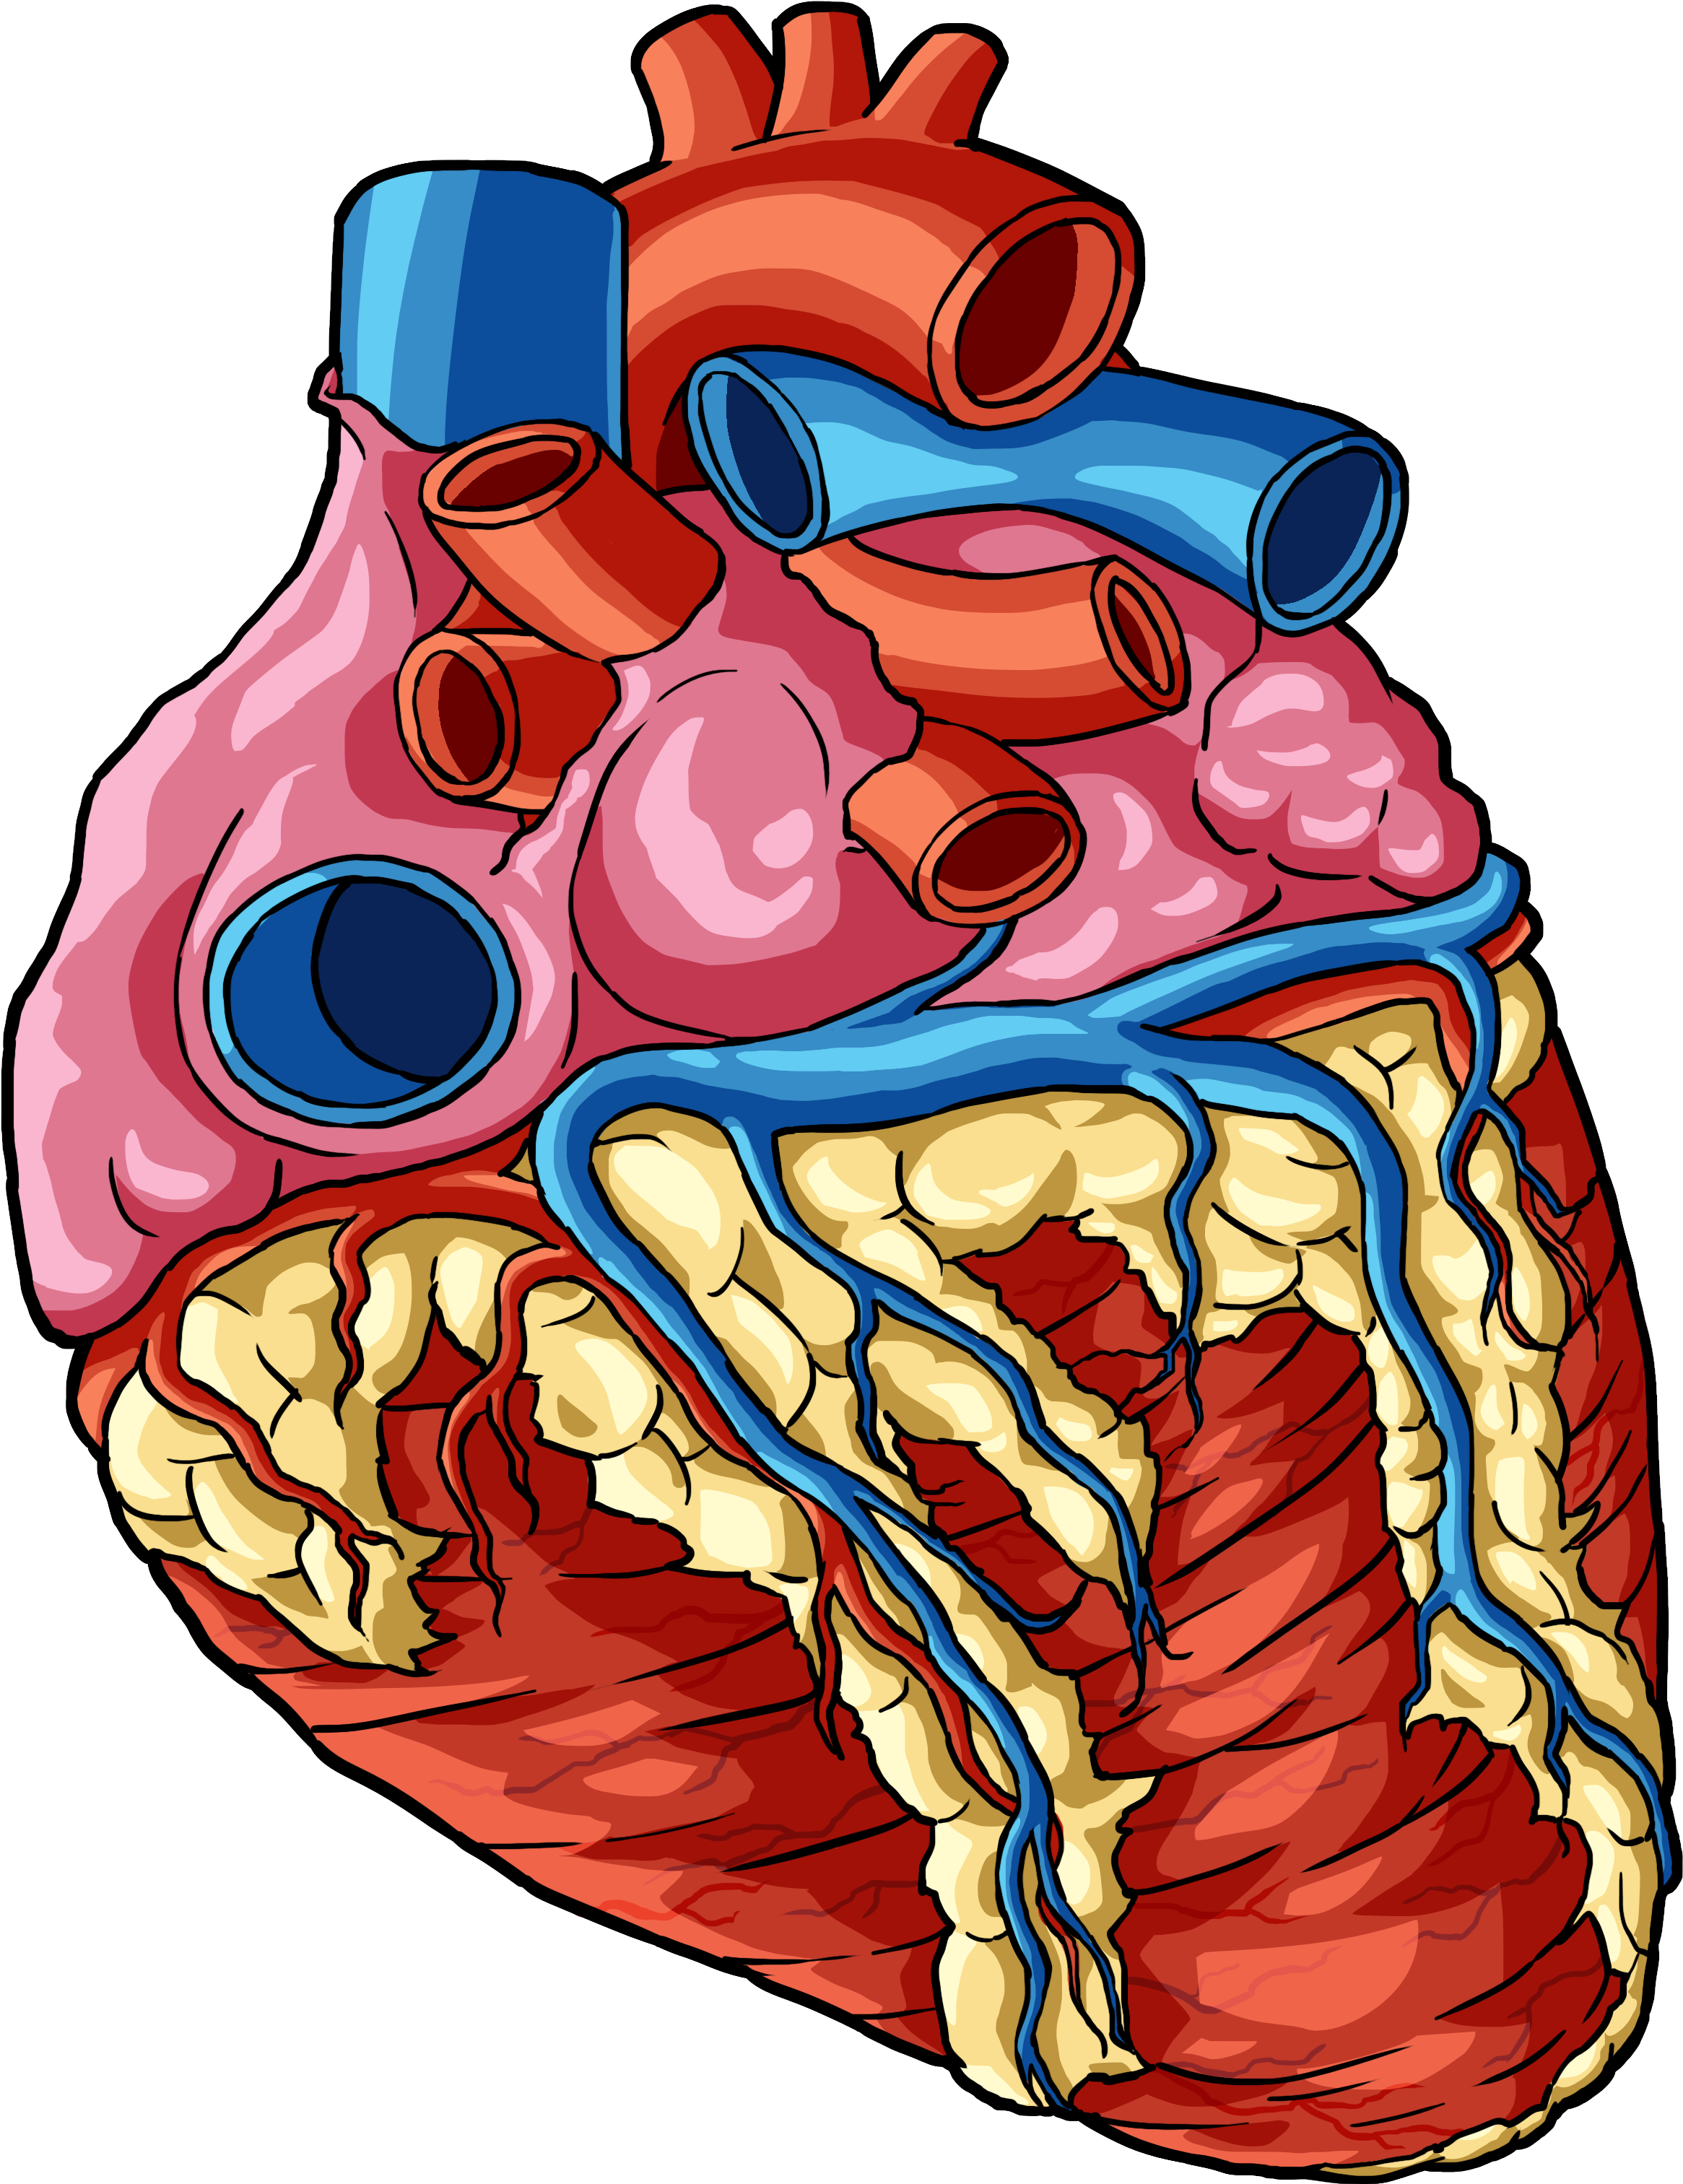 Anatomical Heart PNG Transparent Image